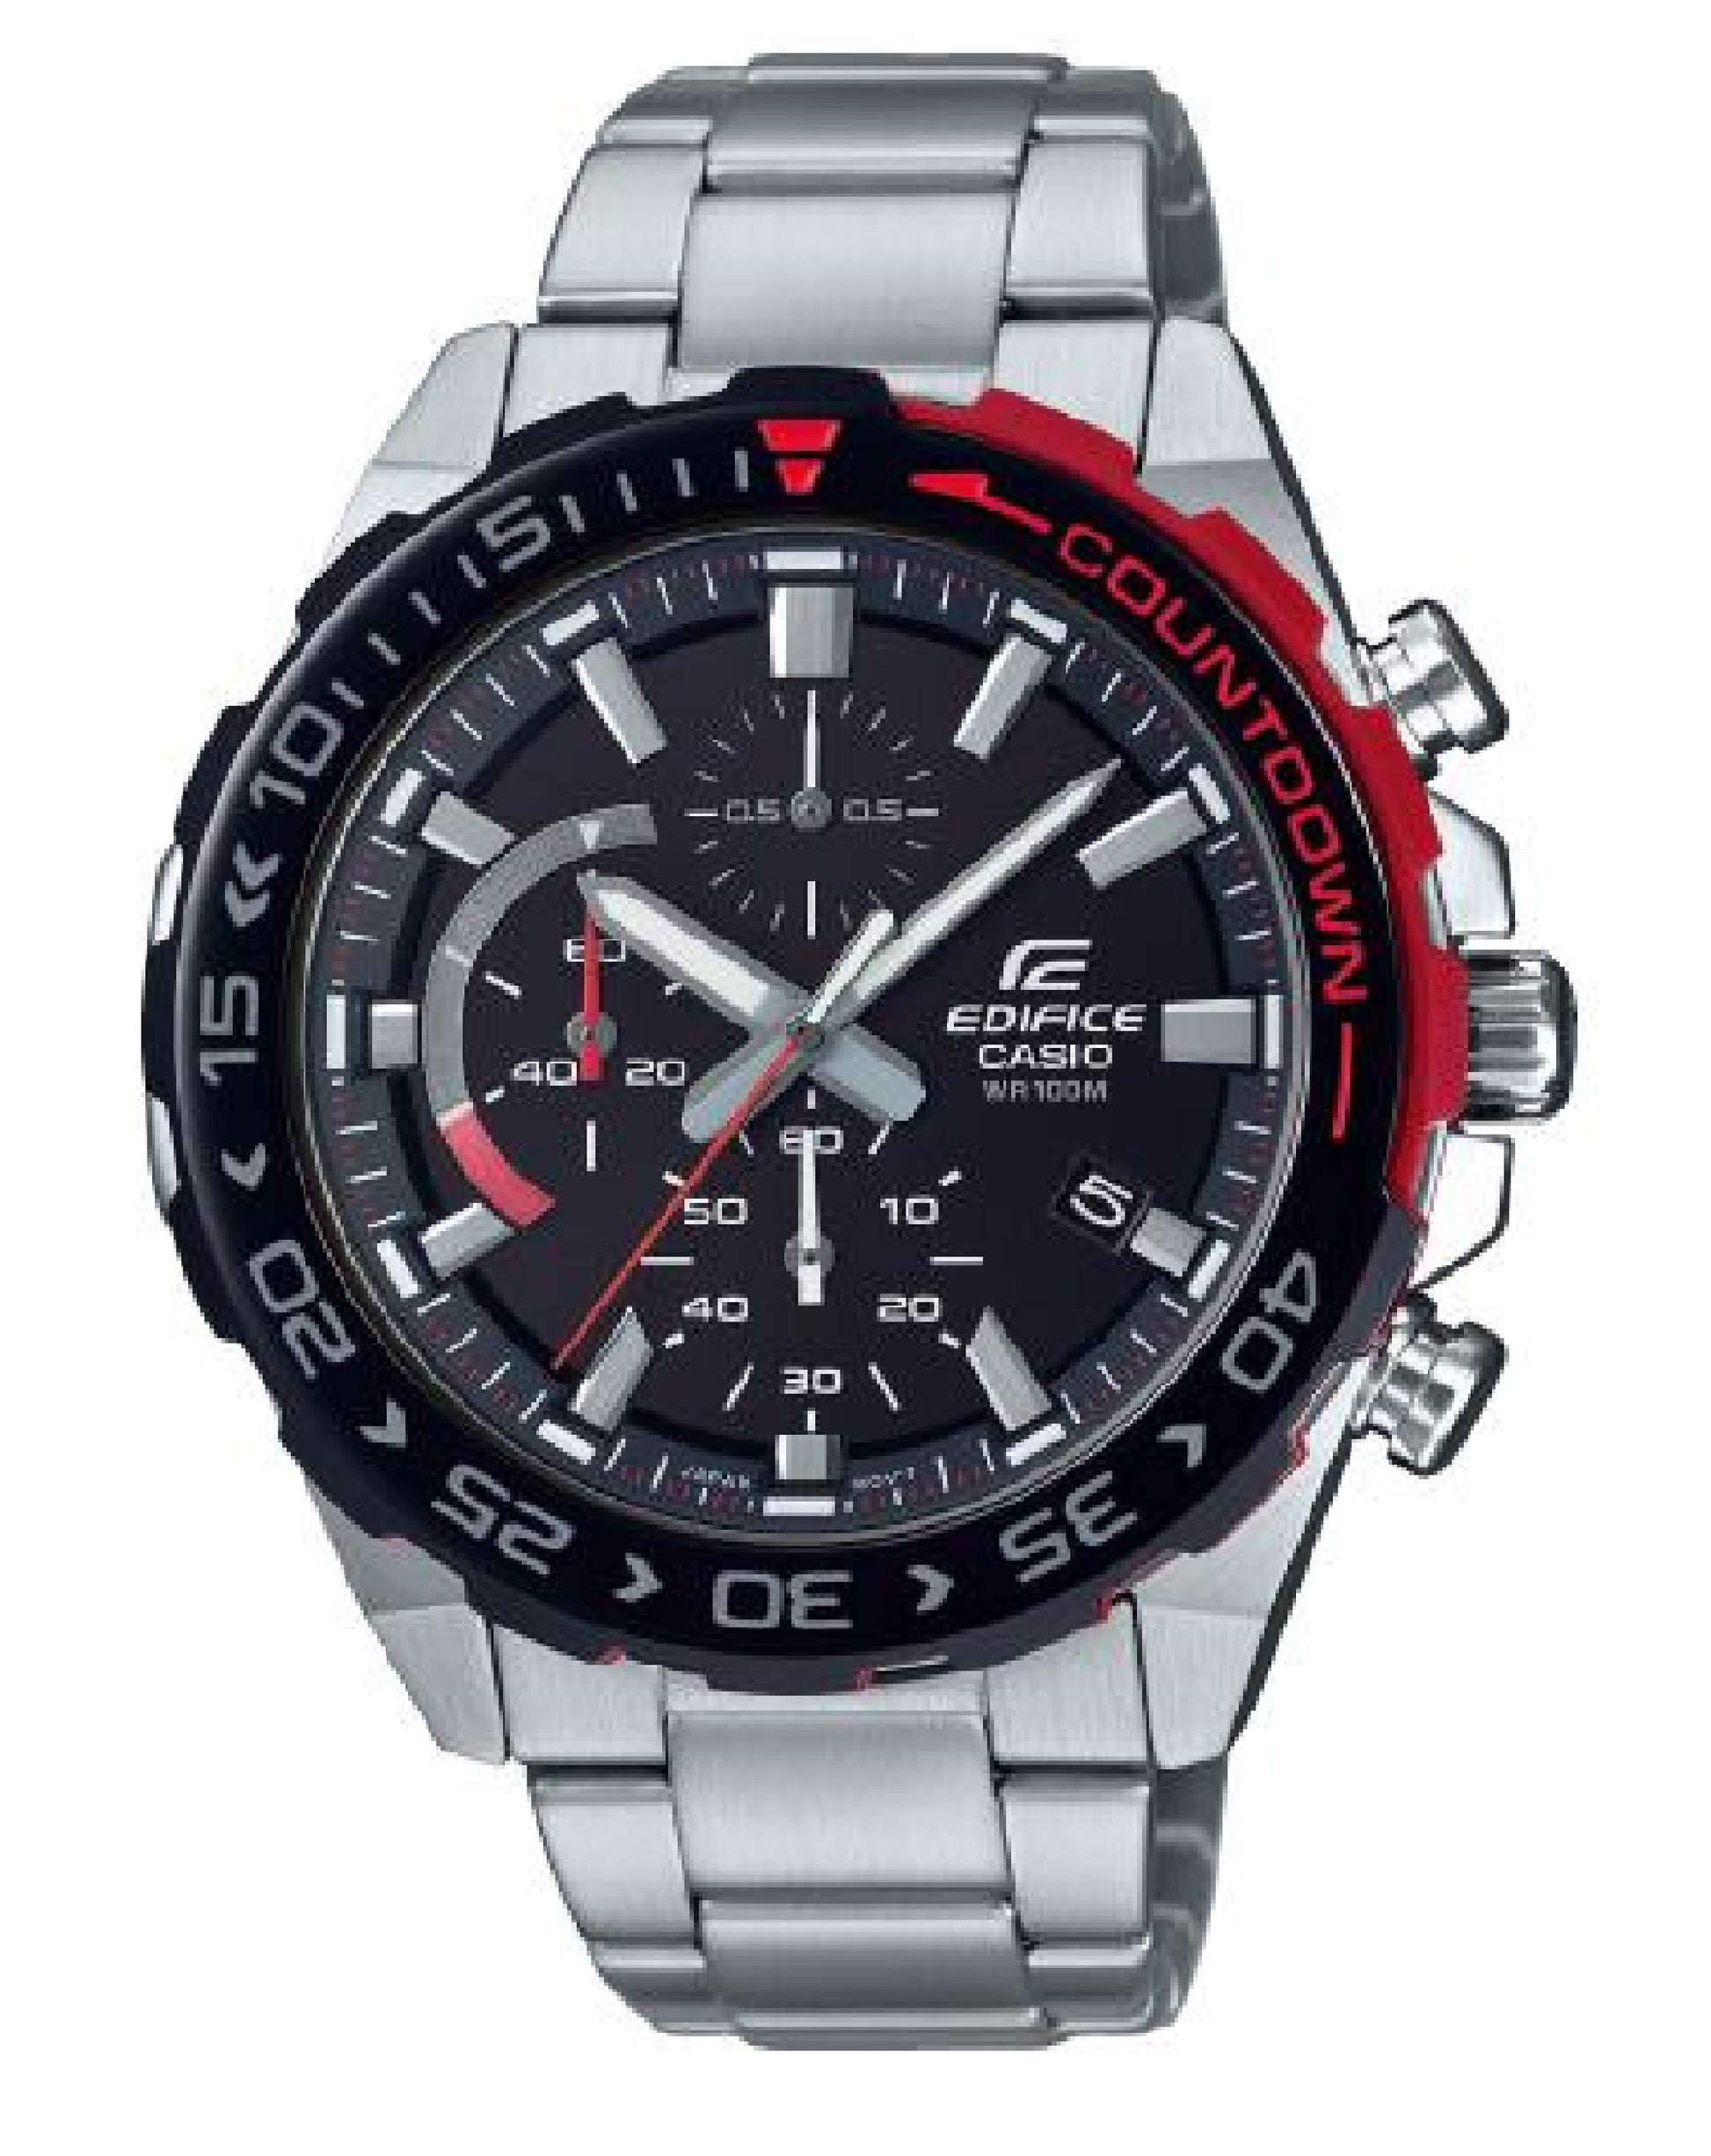 Casio EFR-566DB-1AV CASIO Edifice Premium, Black Dial Watch